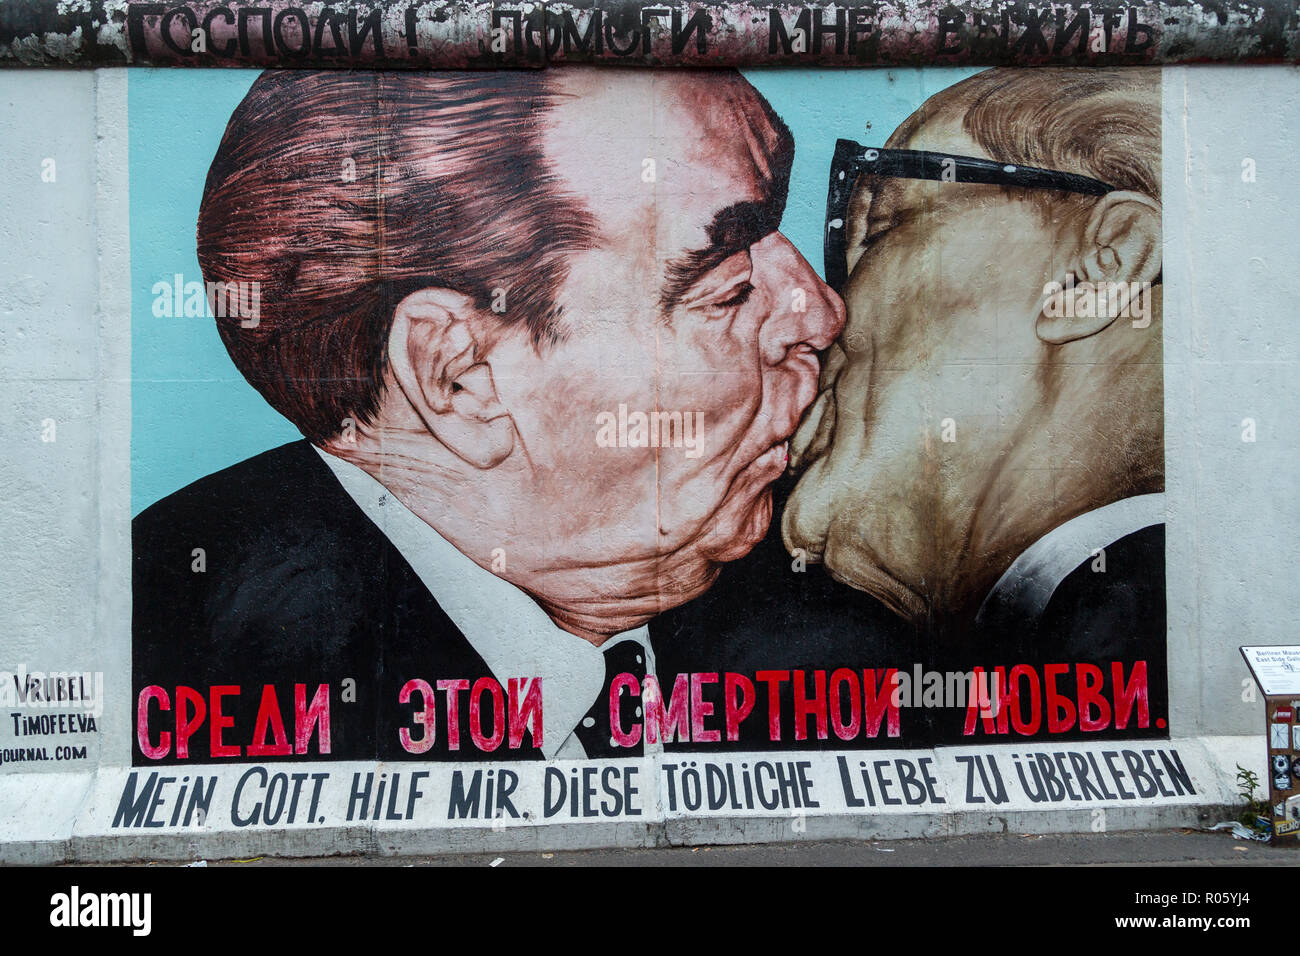 Monument East Side Gallery, Dimitrij Vroubel, frère baiser entre Leonid Brejnev et Erich Honecker, Berlin, Allemagne Banque D'Images